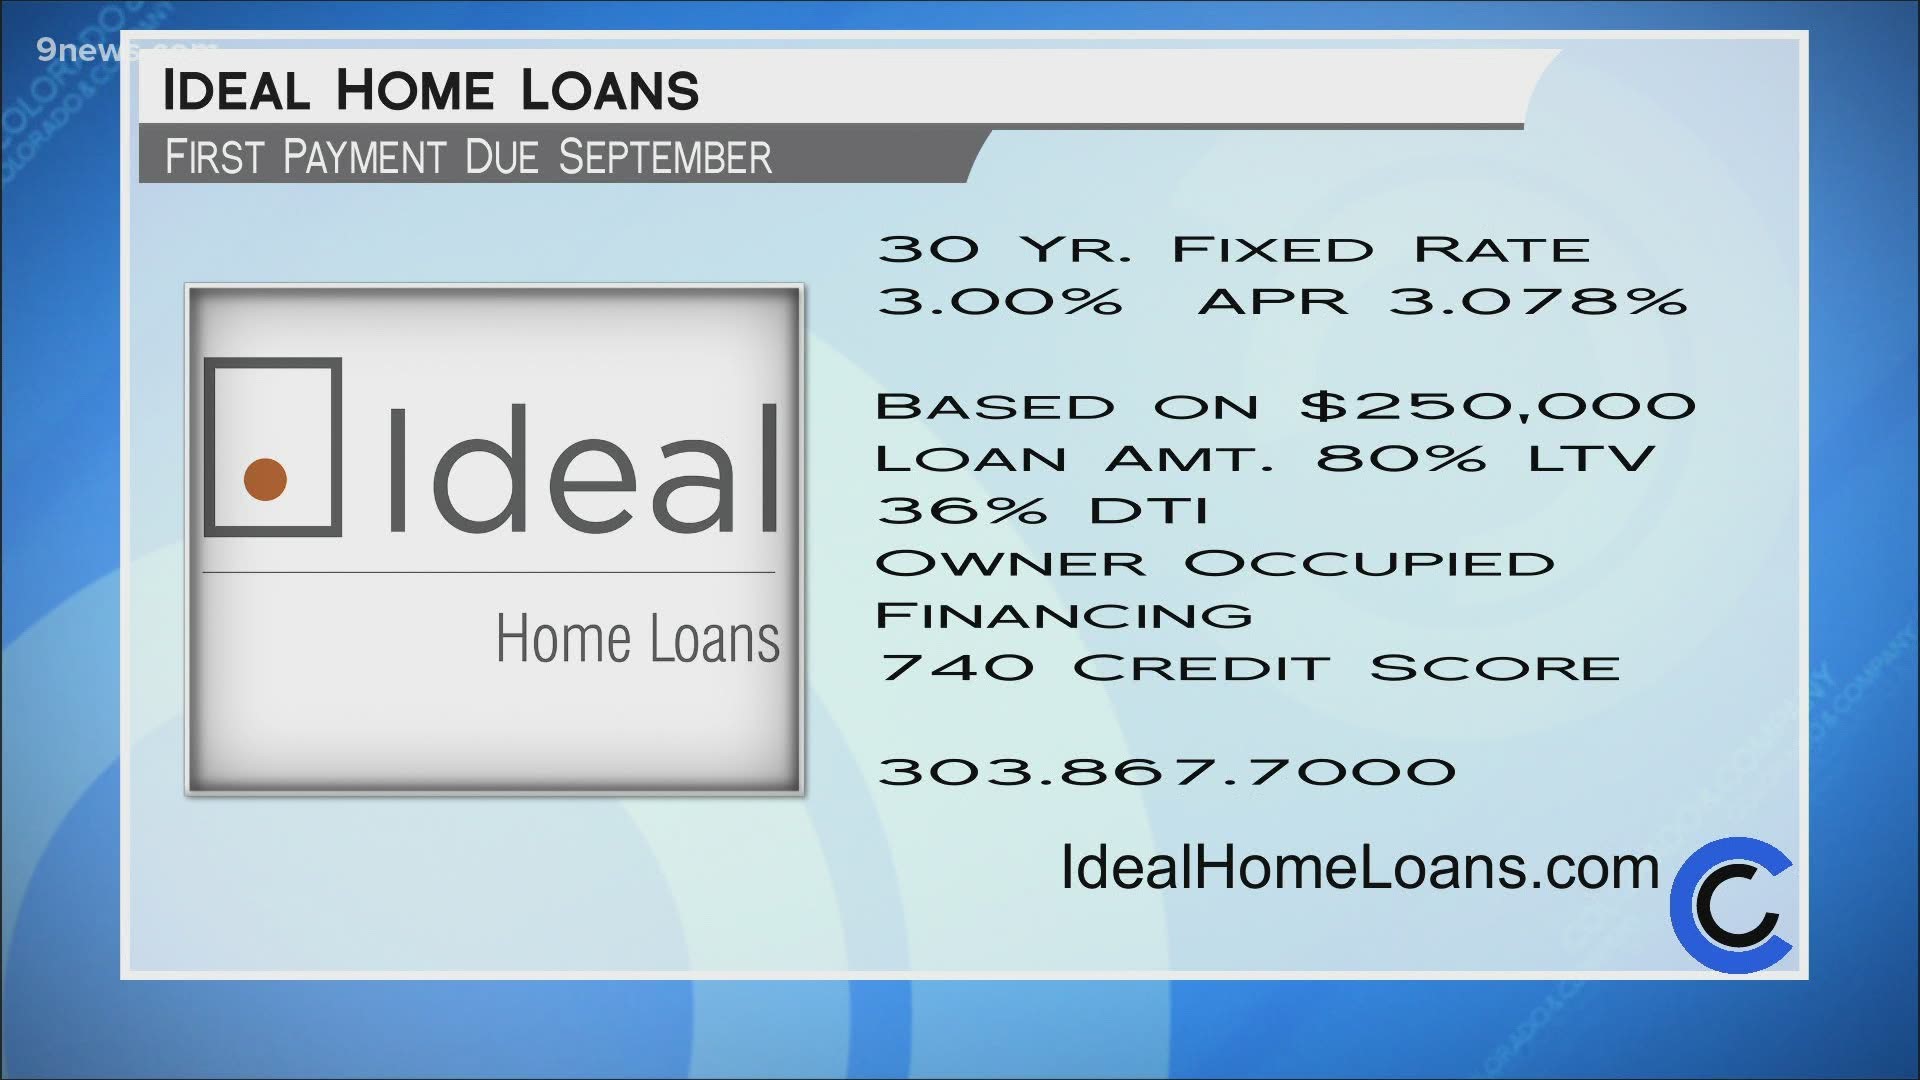 Ideal Home Loans July 7 2020 9news Com